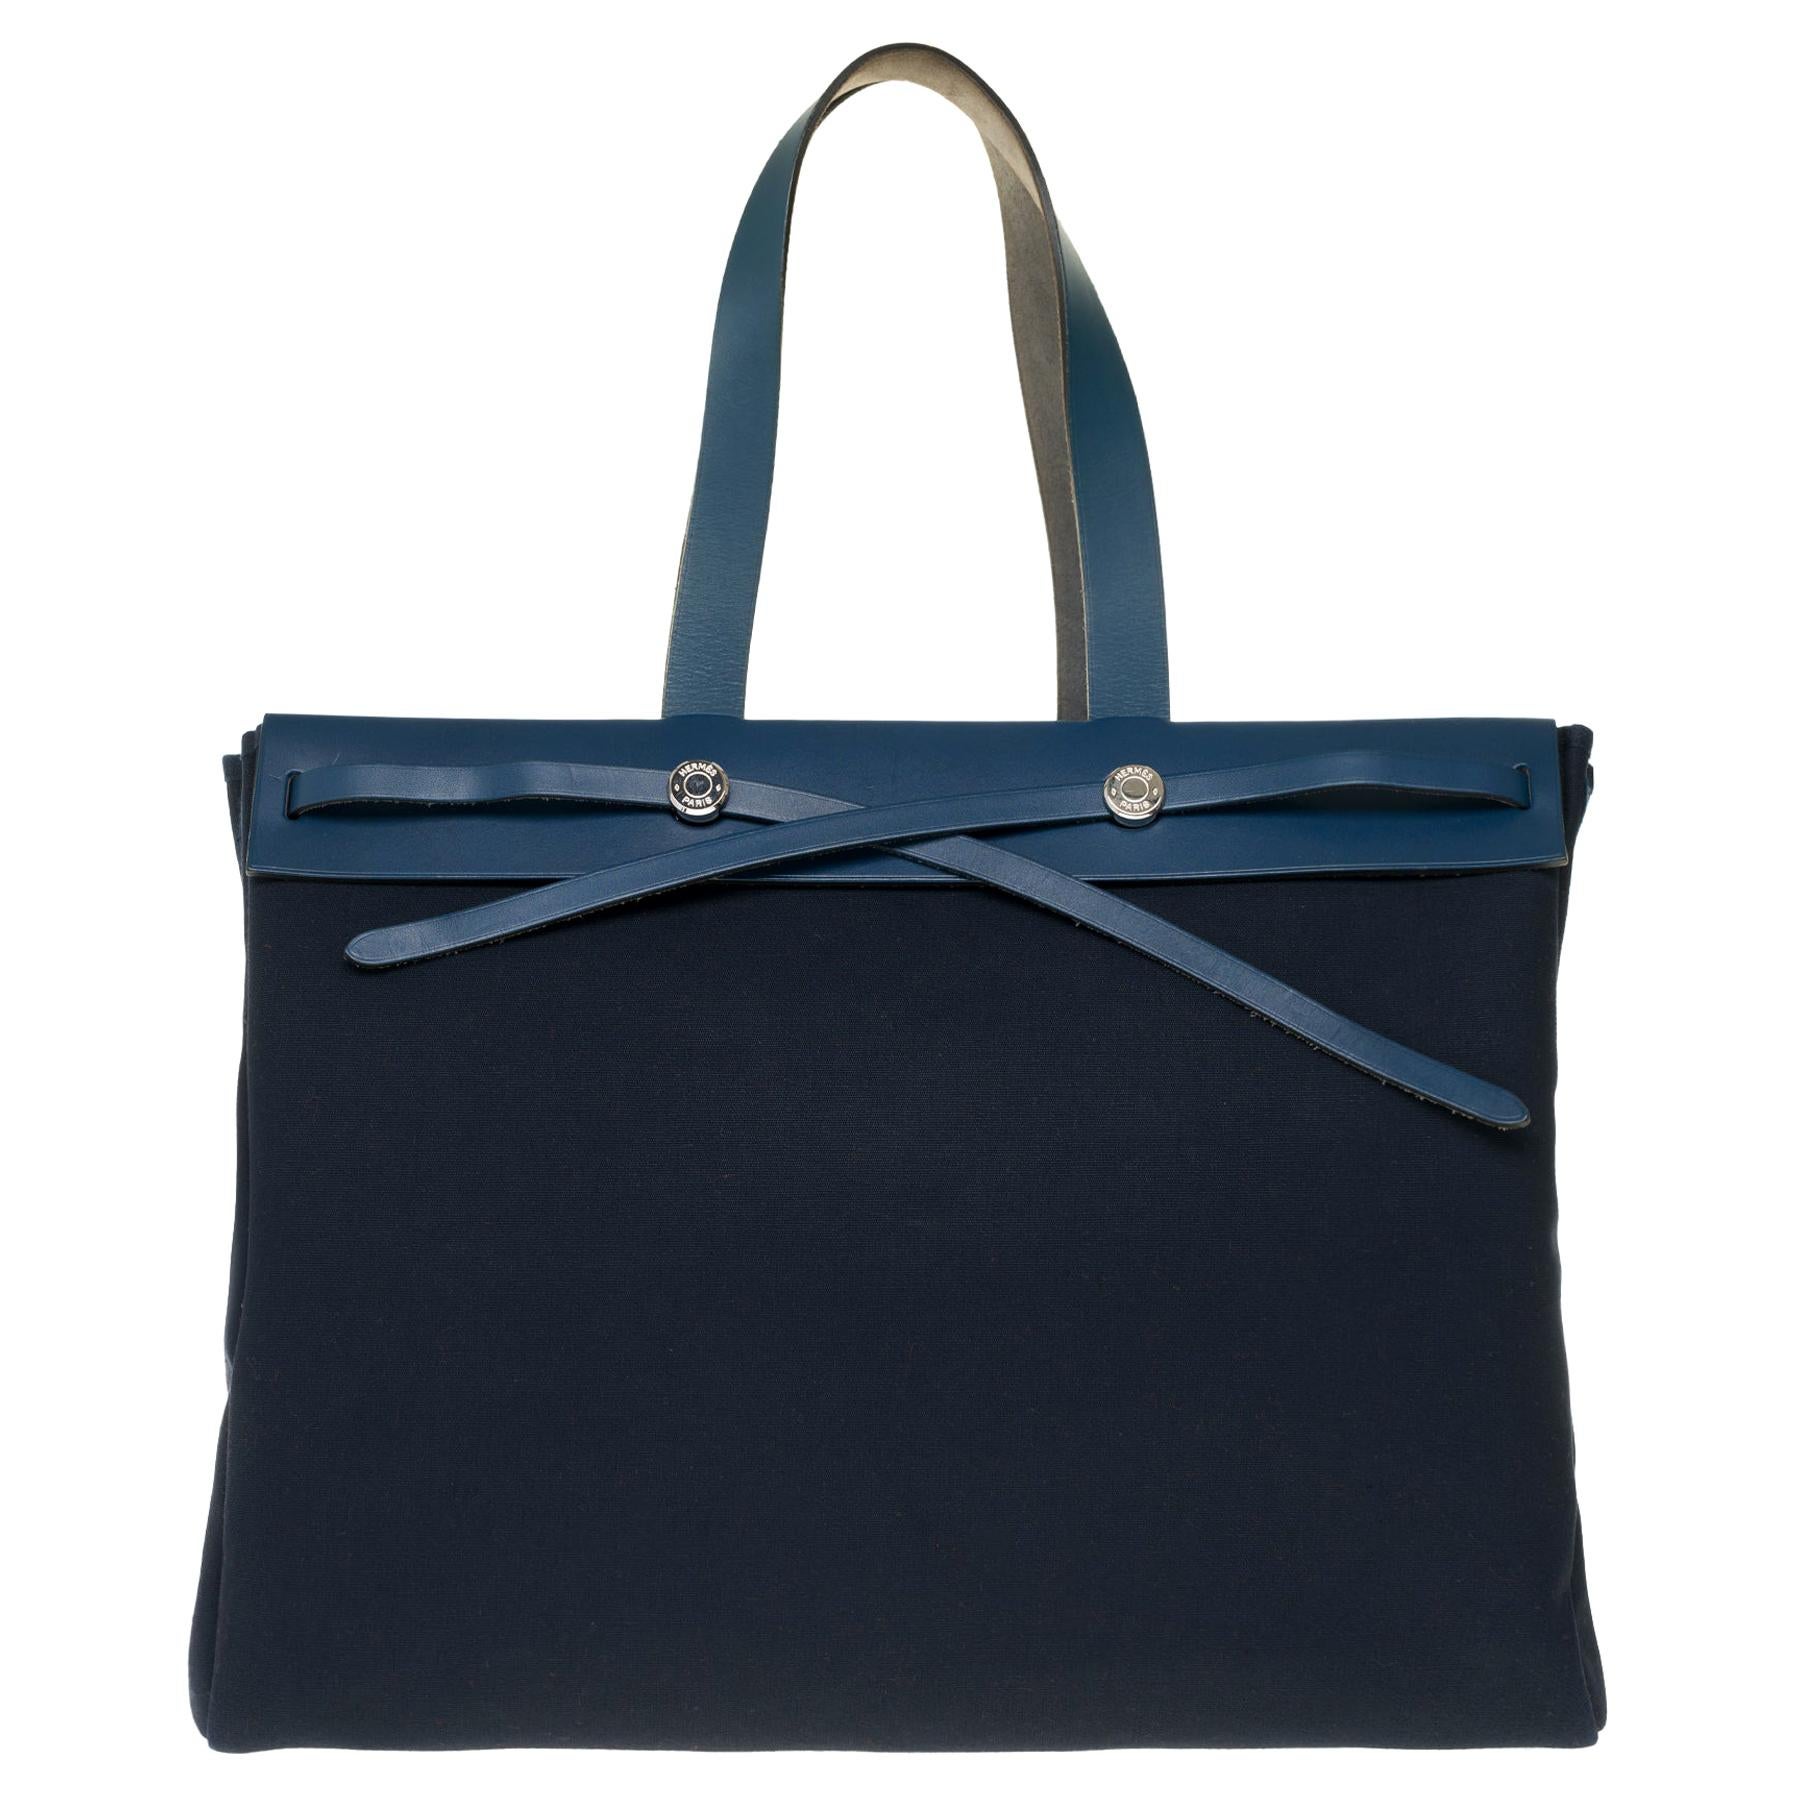 Hermès Herbag GM handbag in navy blue canvas and blue leather